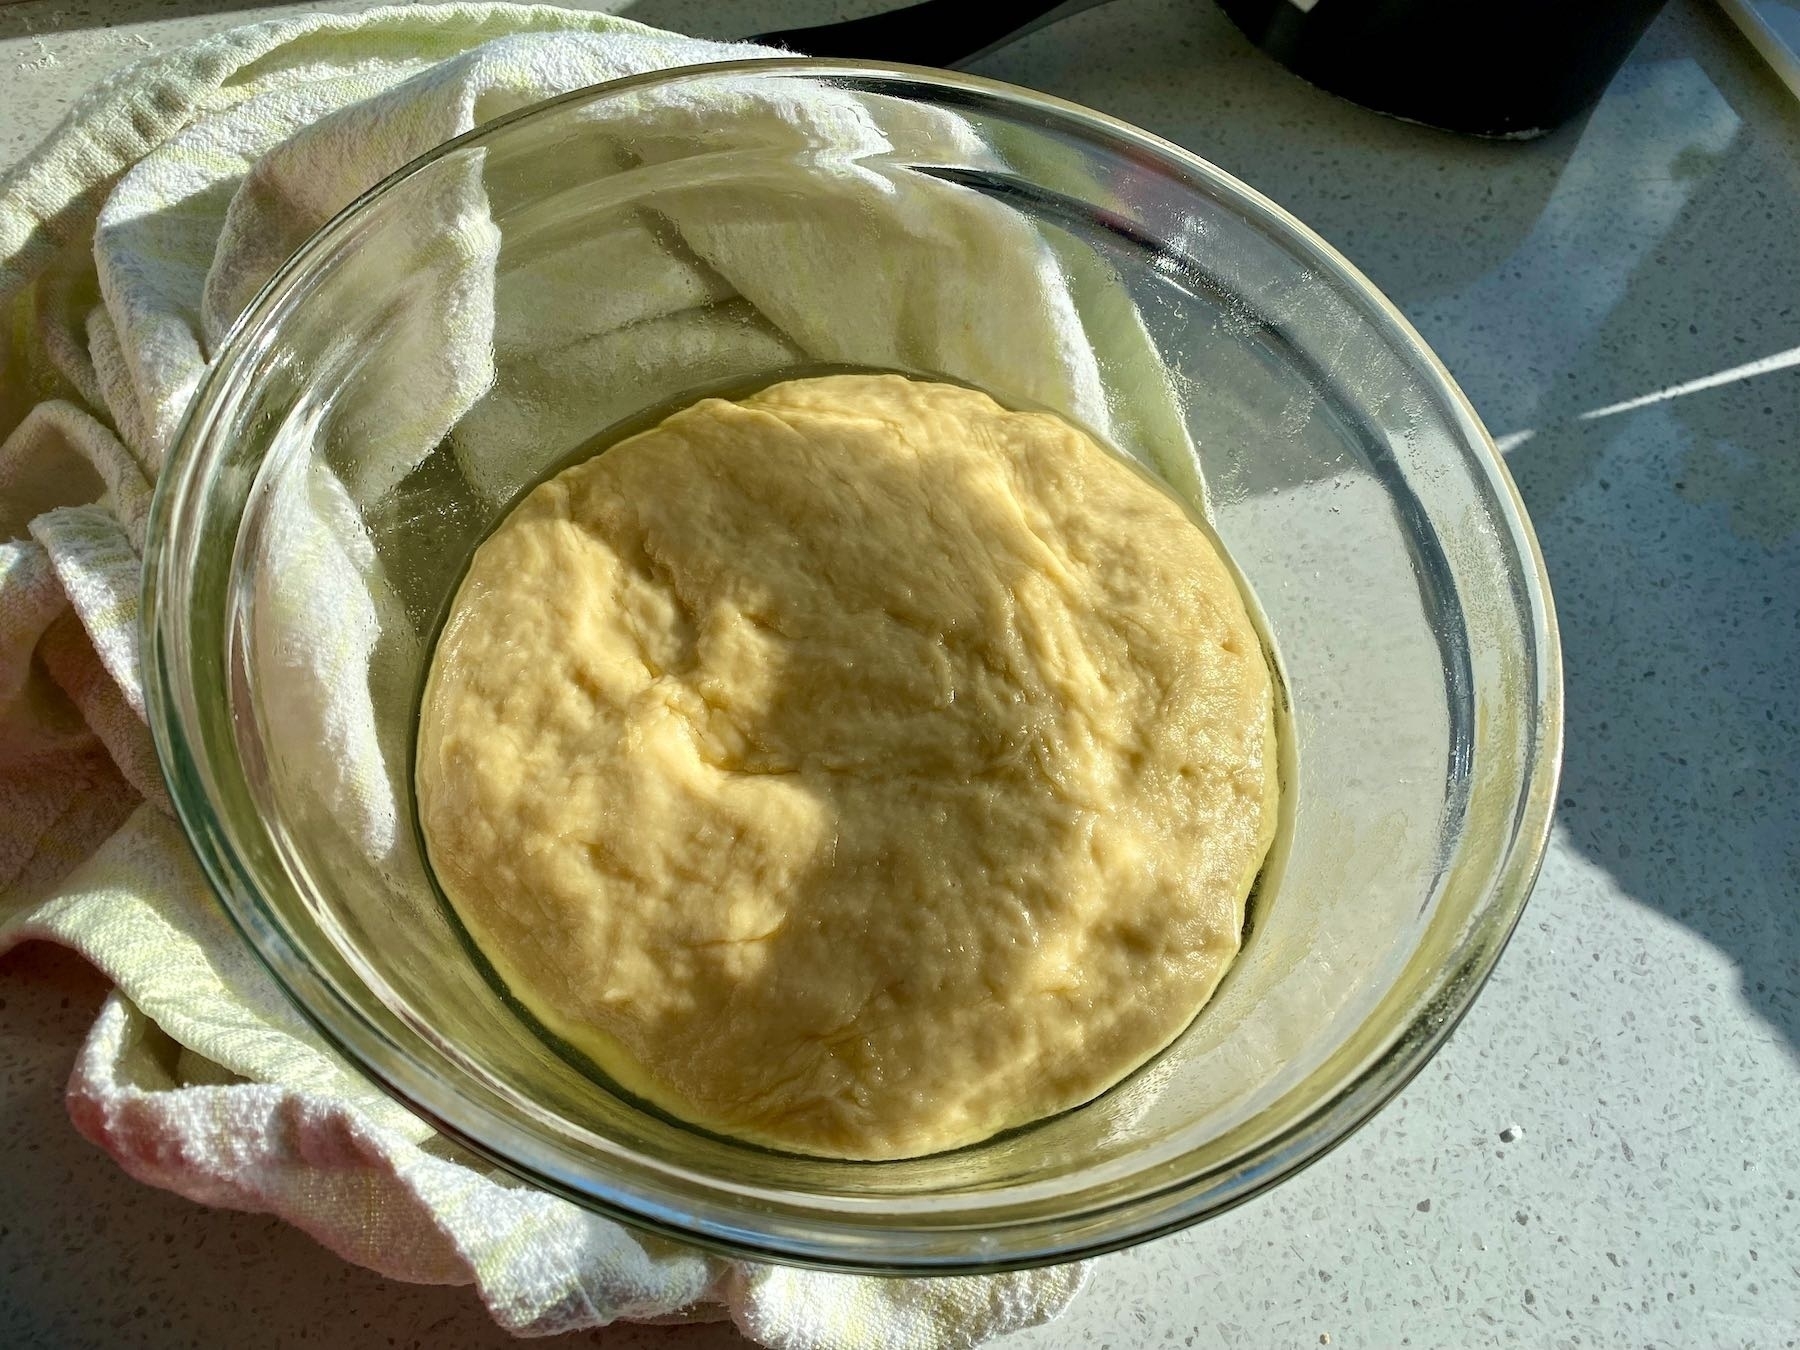 Dough rising in a bowl. 